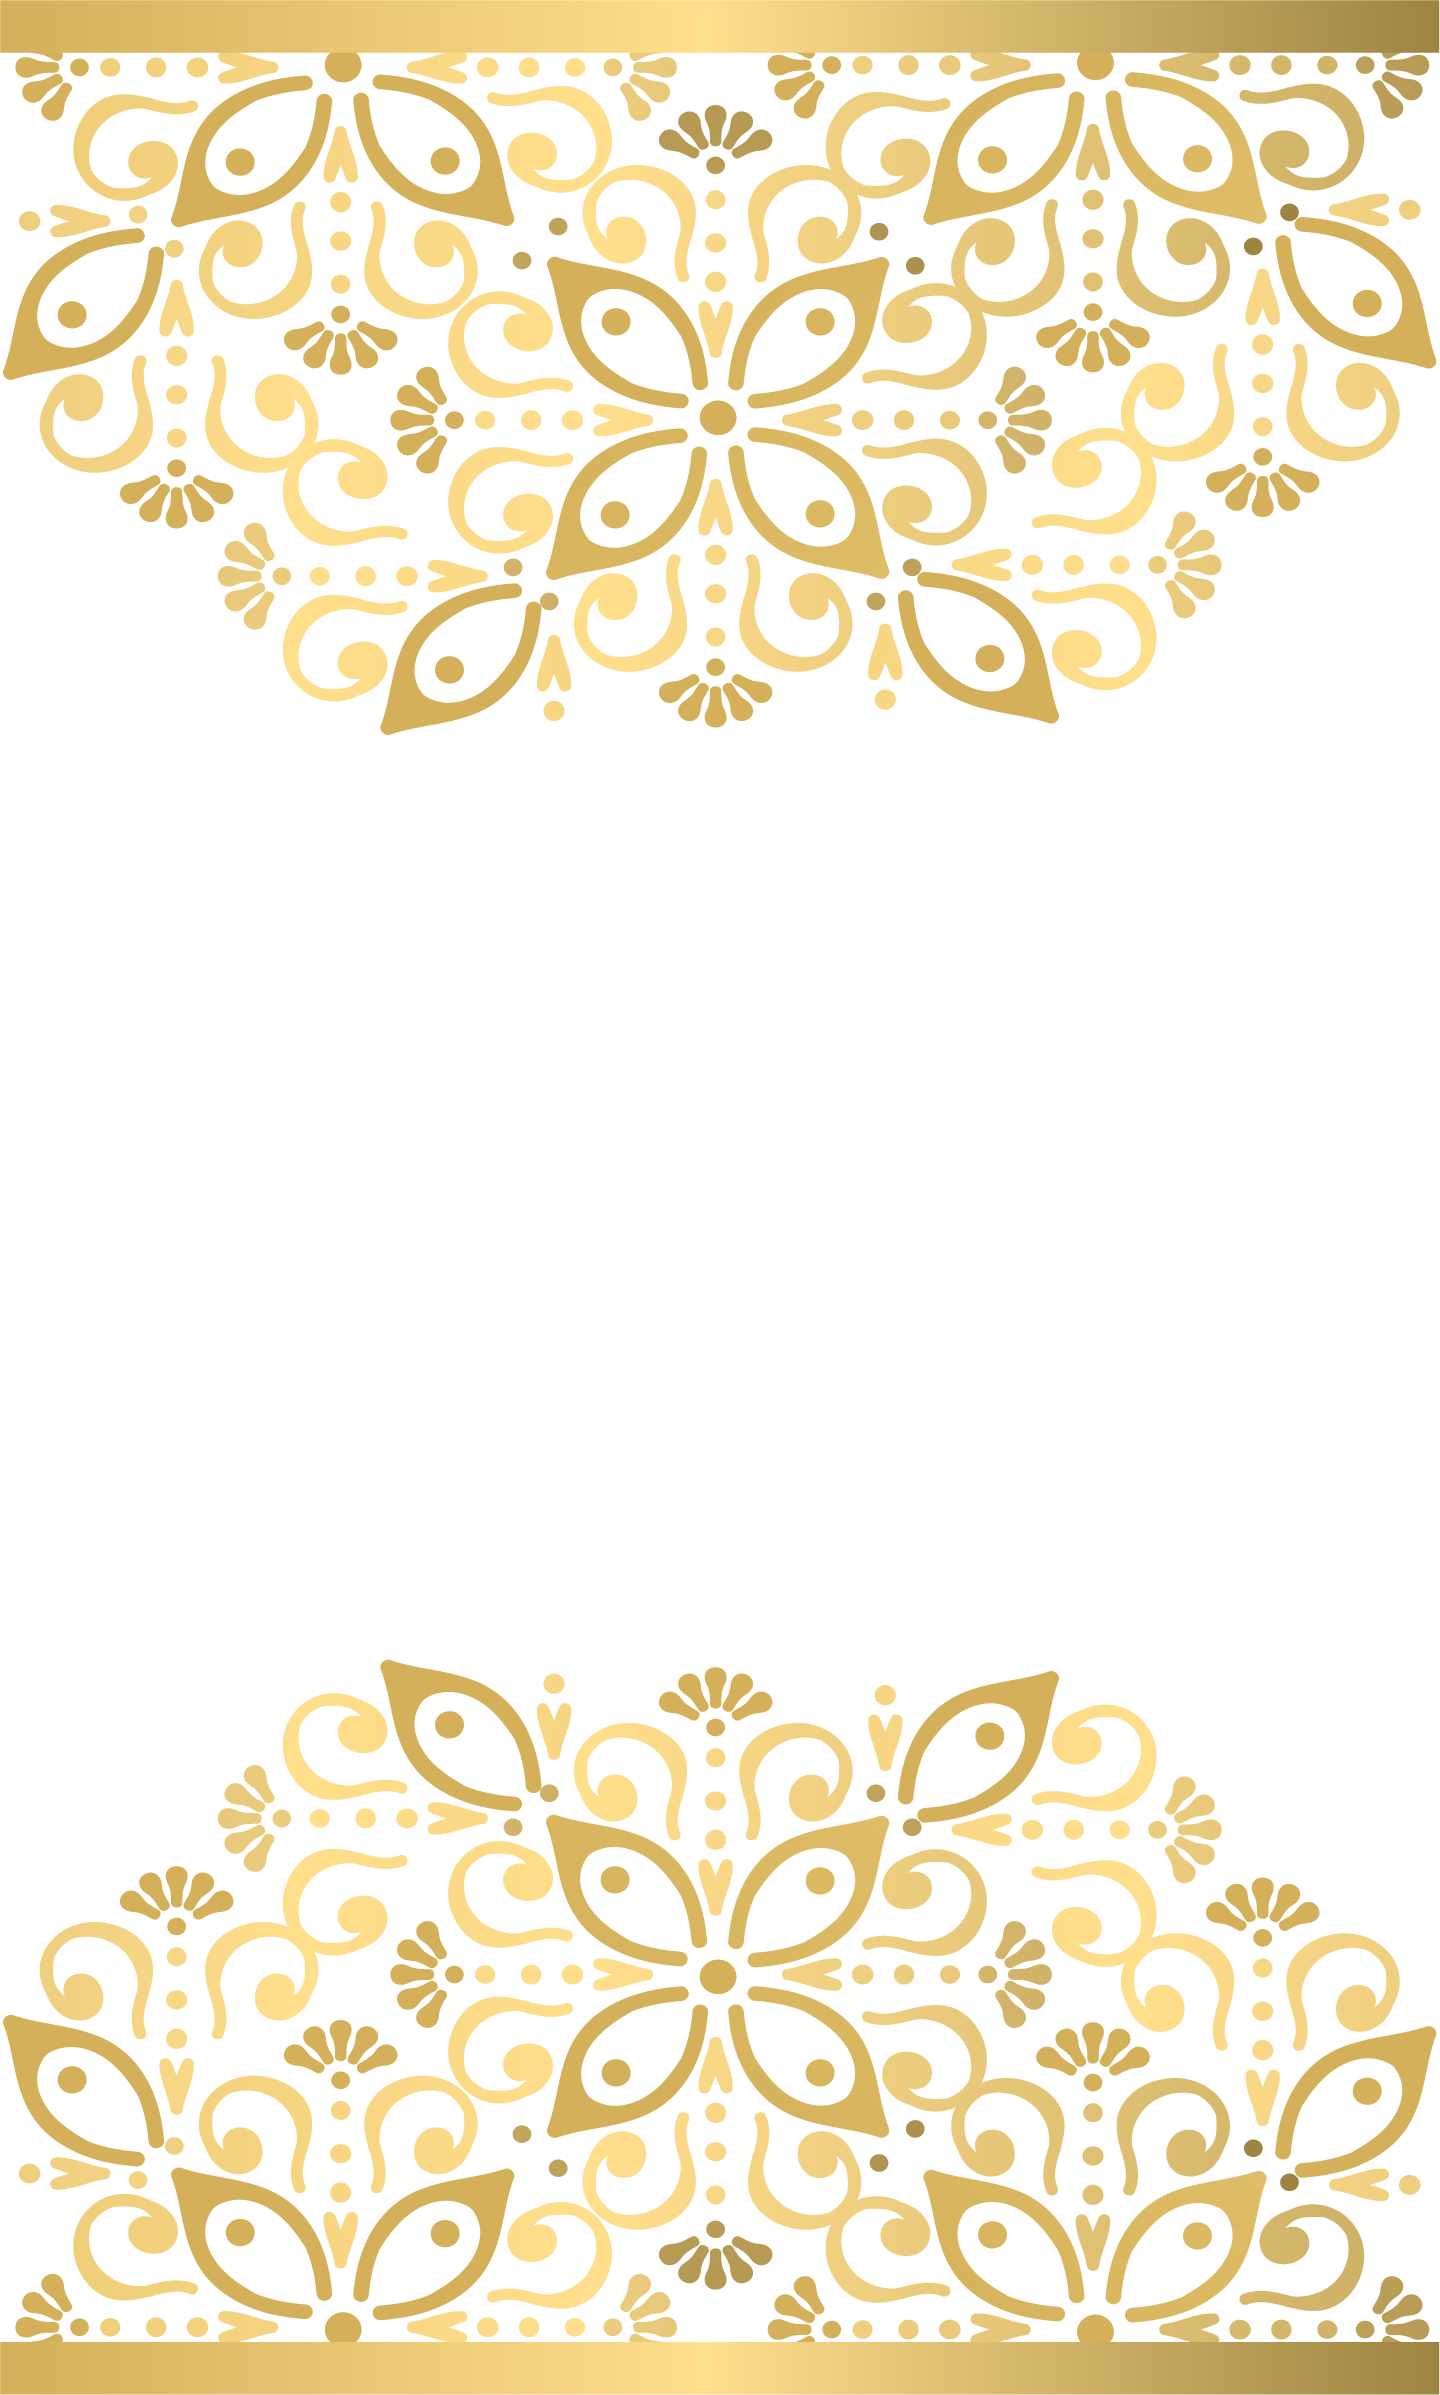 Invitation clipart invitation letter. Paper motif pattern golden